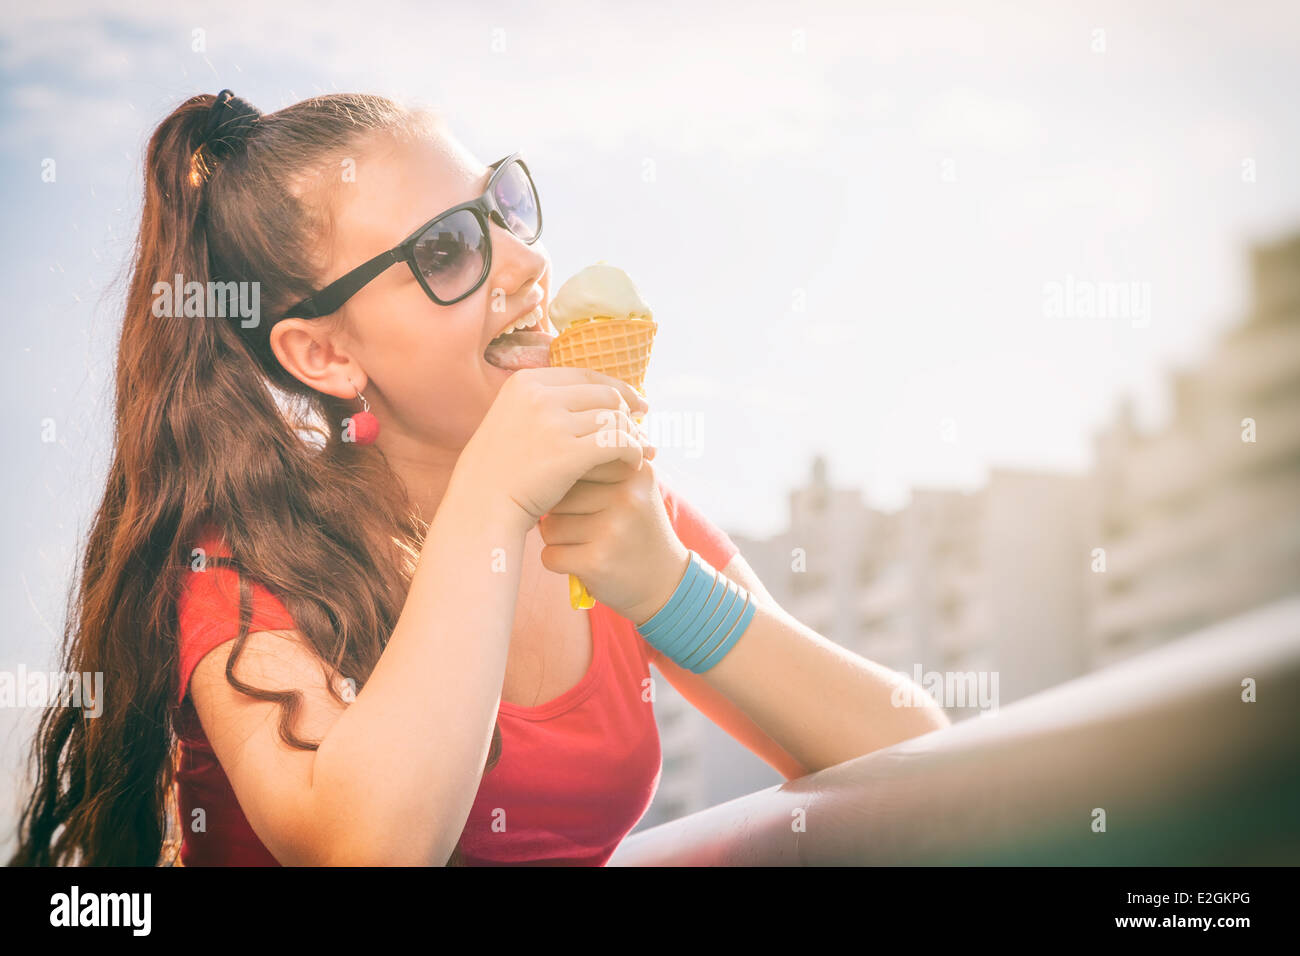 girl having fun and eating ice cream Stock Photo